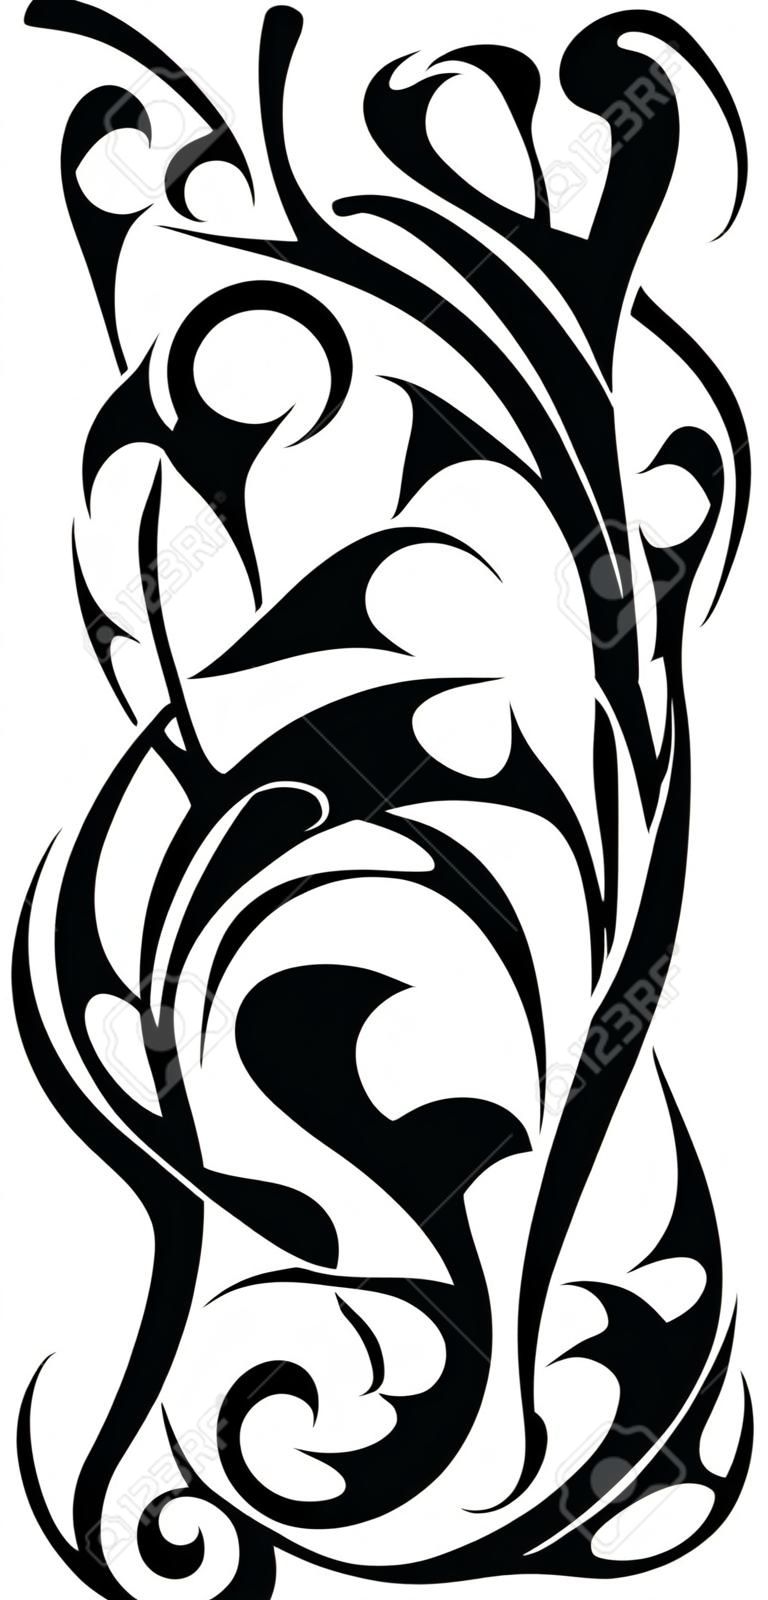 Tribal art tattoo abstract shape